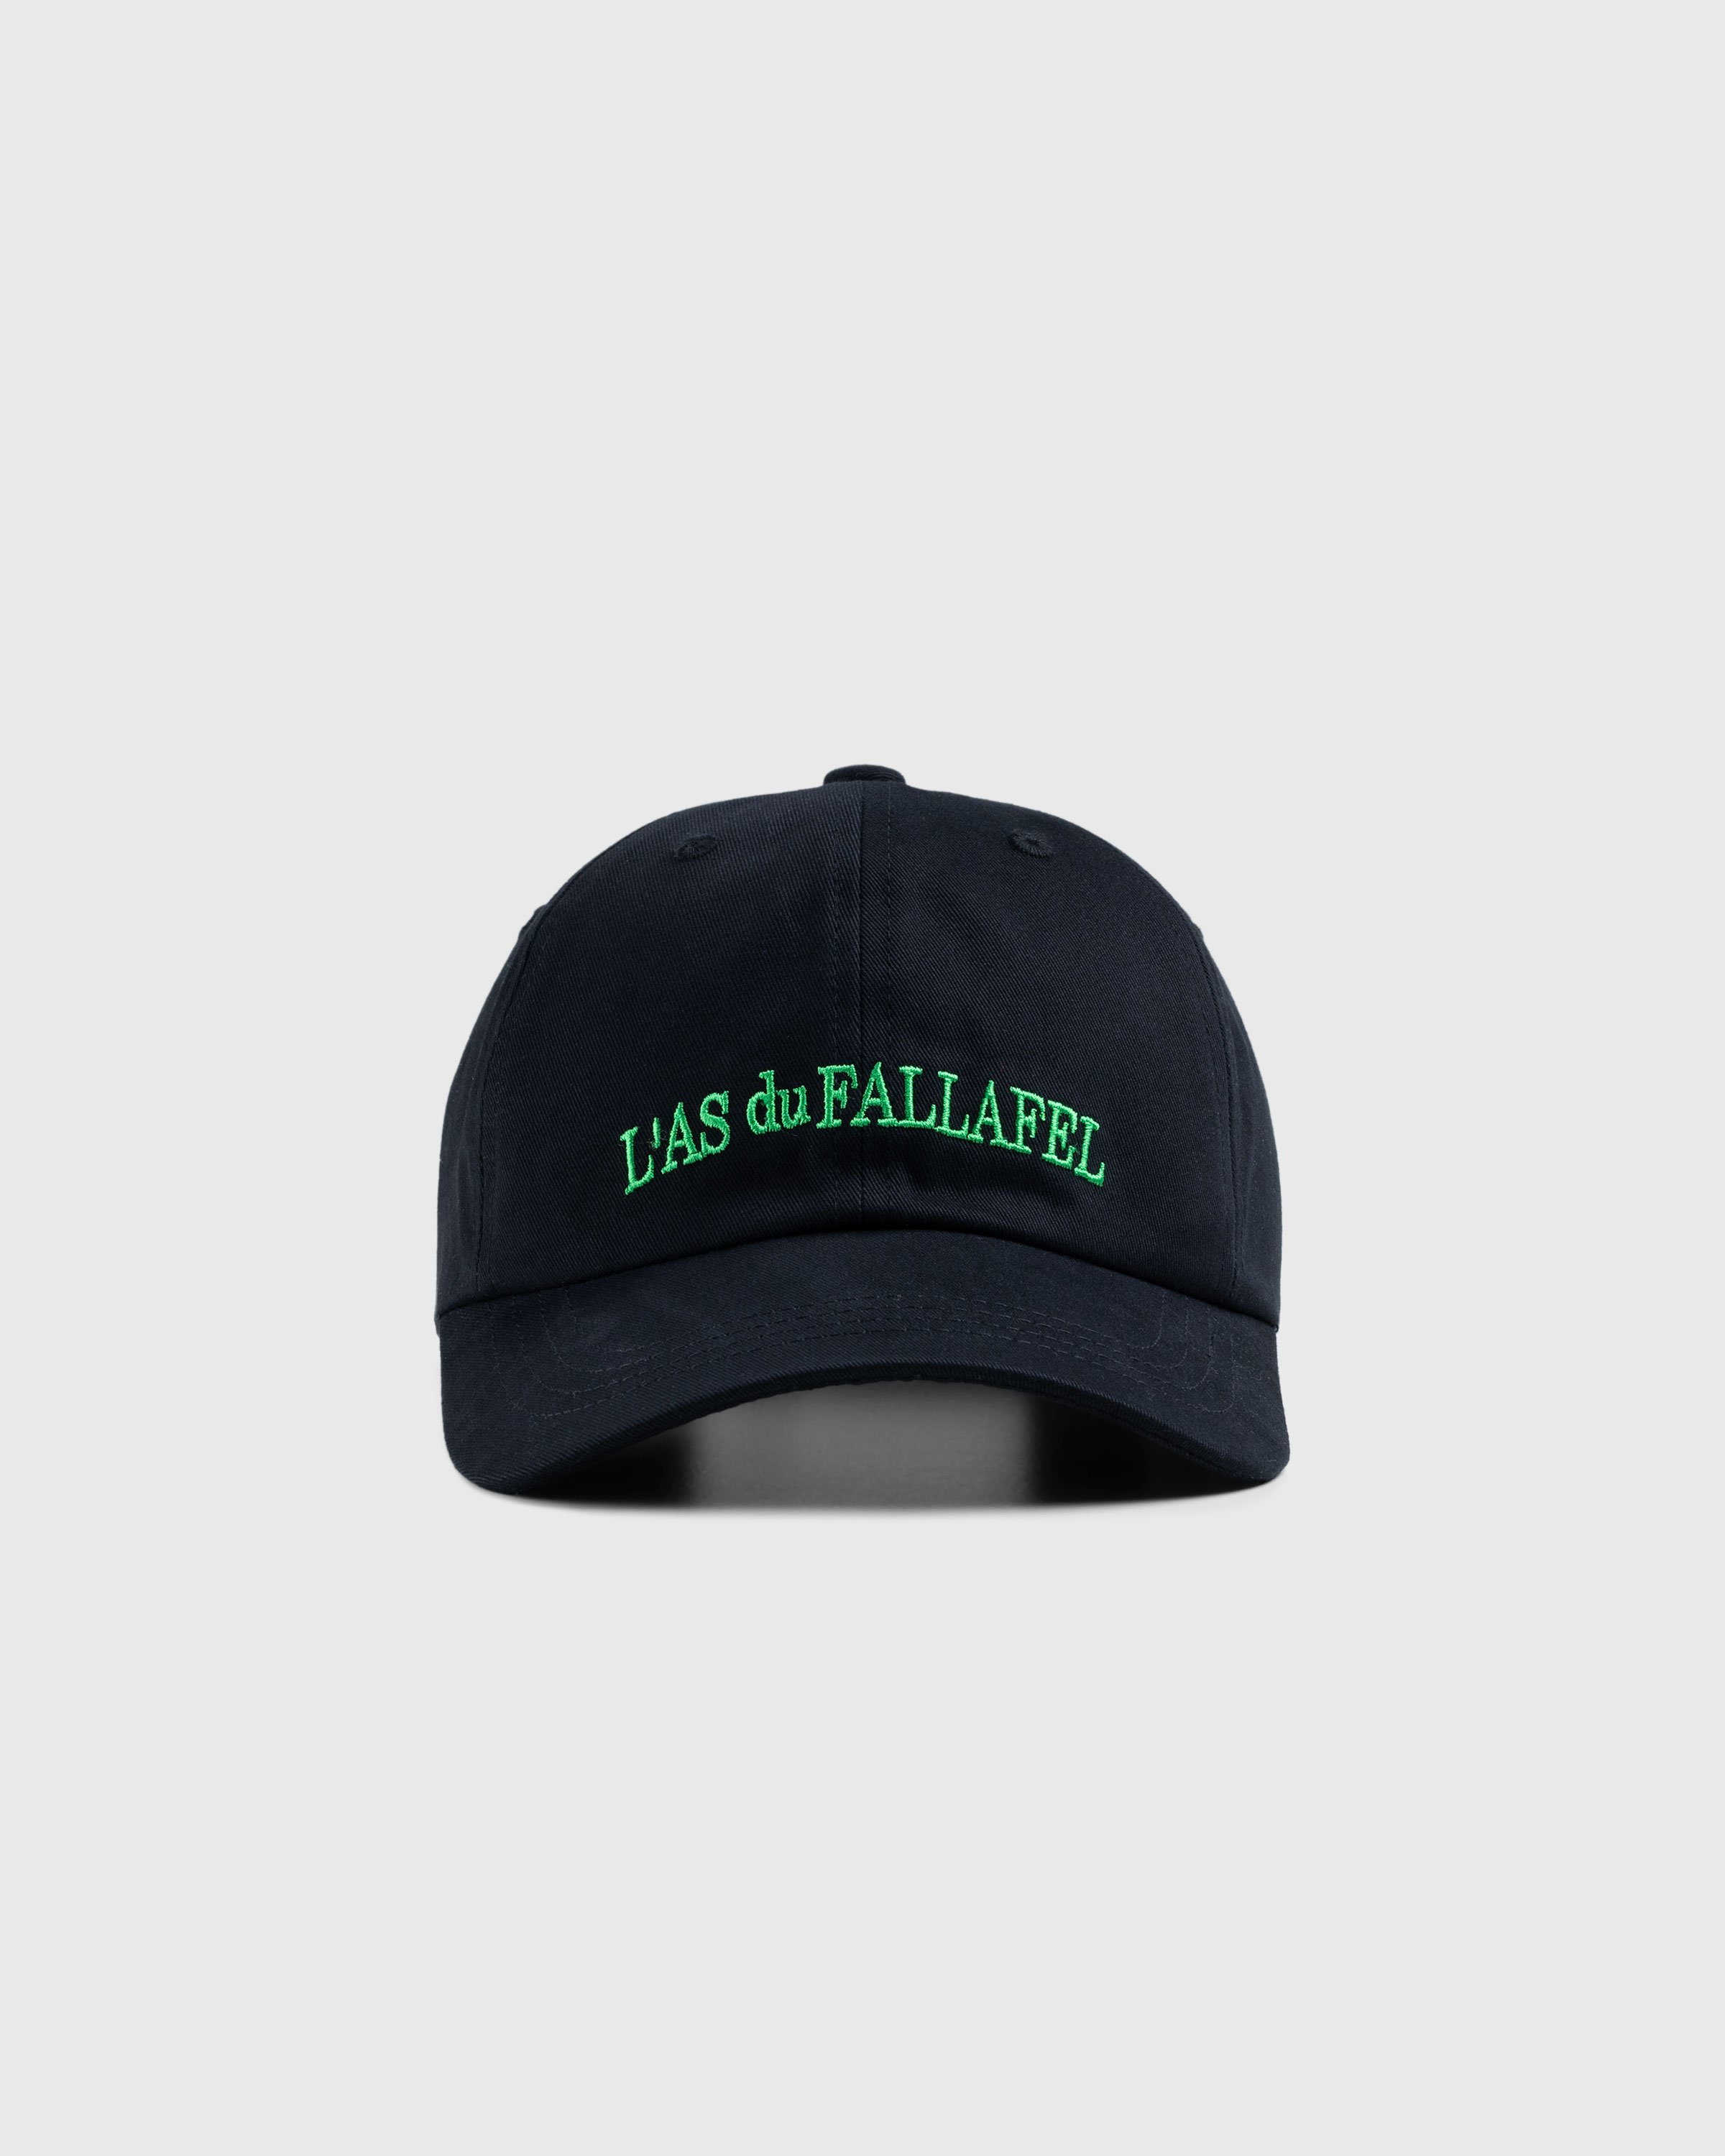 L'As du Fallafel x Highsnobiety - Ball Cap - Accessories - Black - Image 3